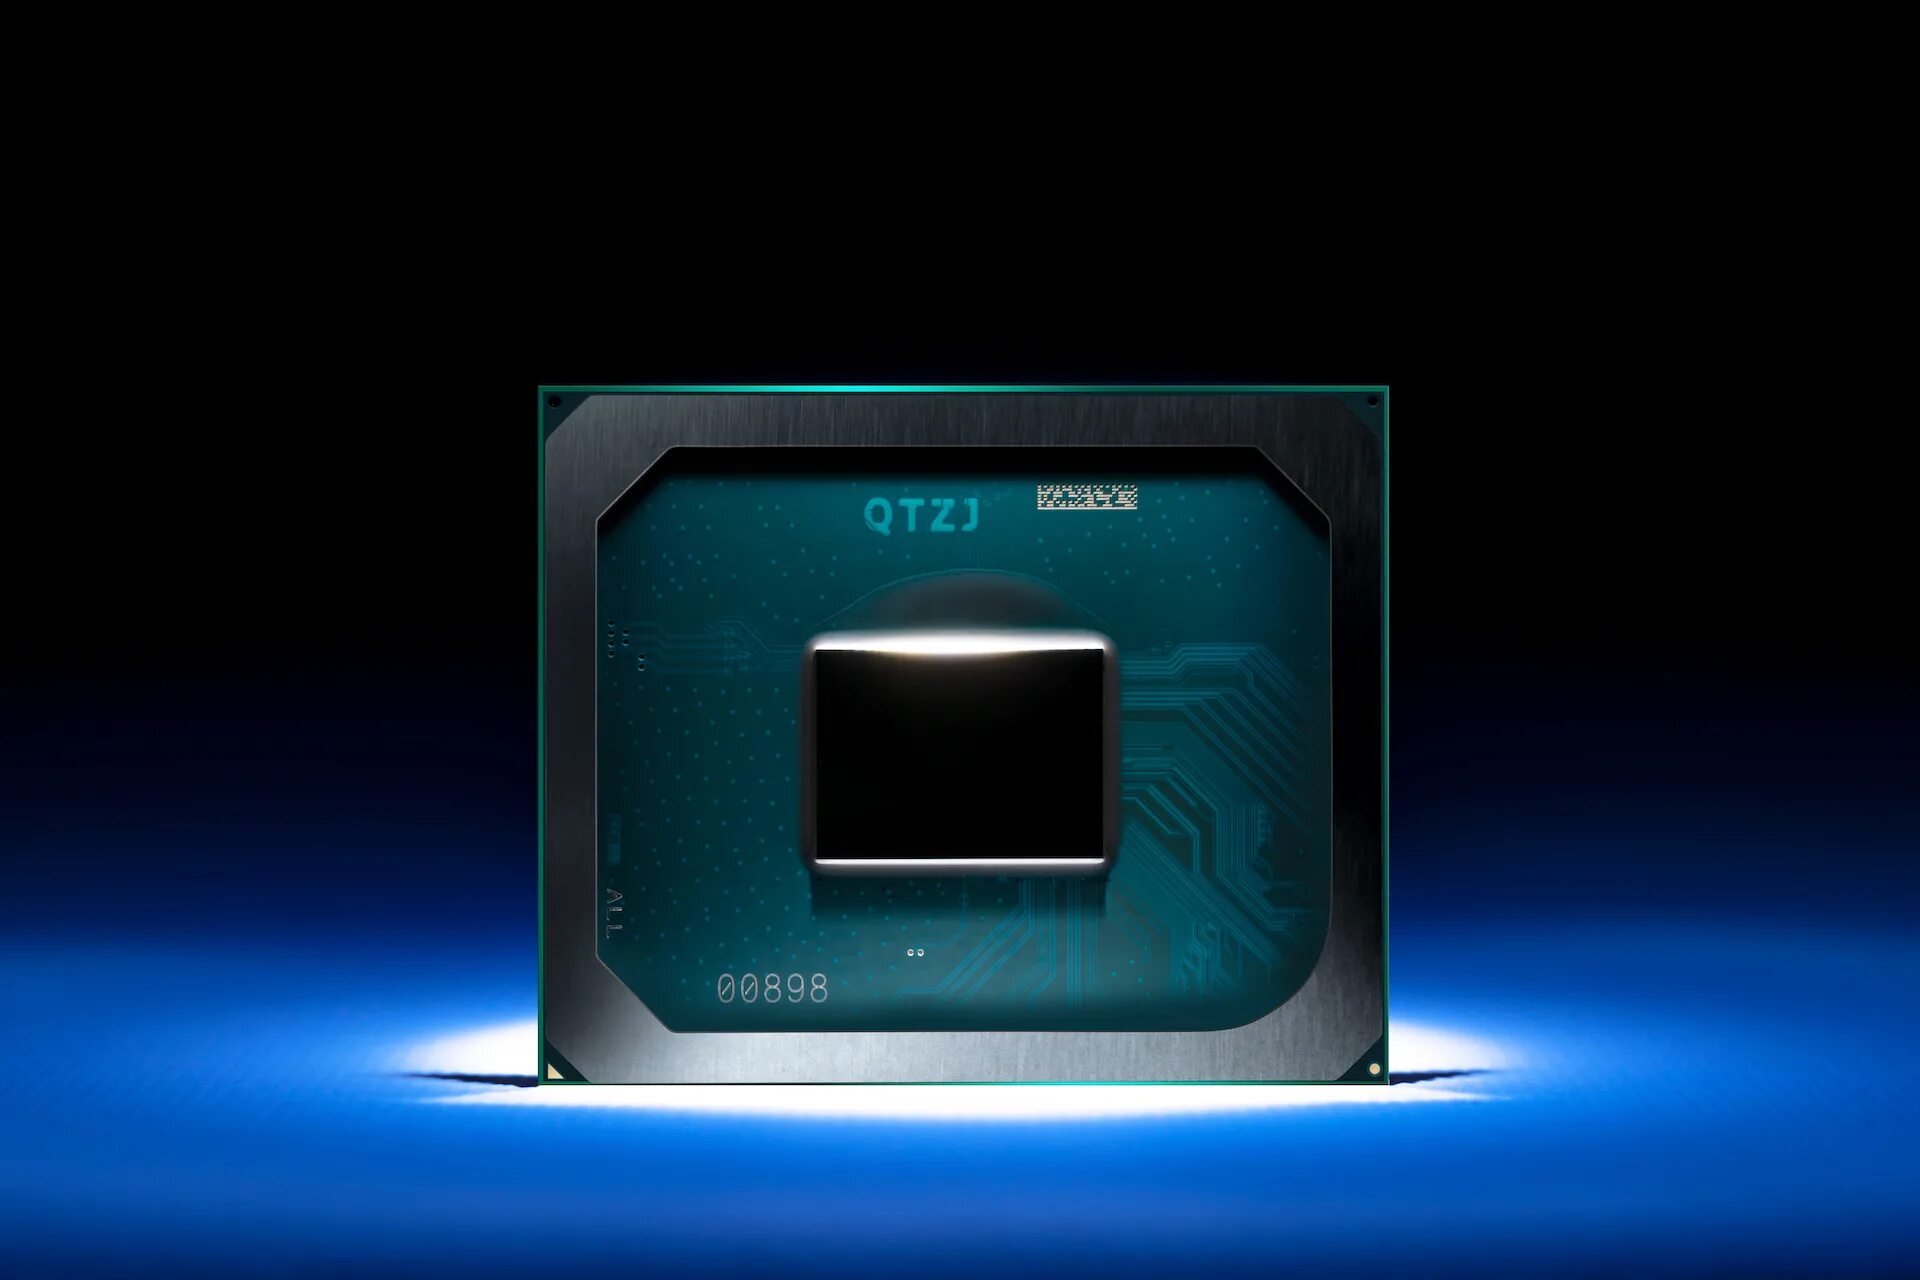 Graphics xe. Intel Iris xe. Intel® Iris® xe Max. Intel Iris xe Max Graphics. Intel i9 12900k.